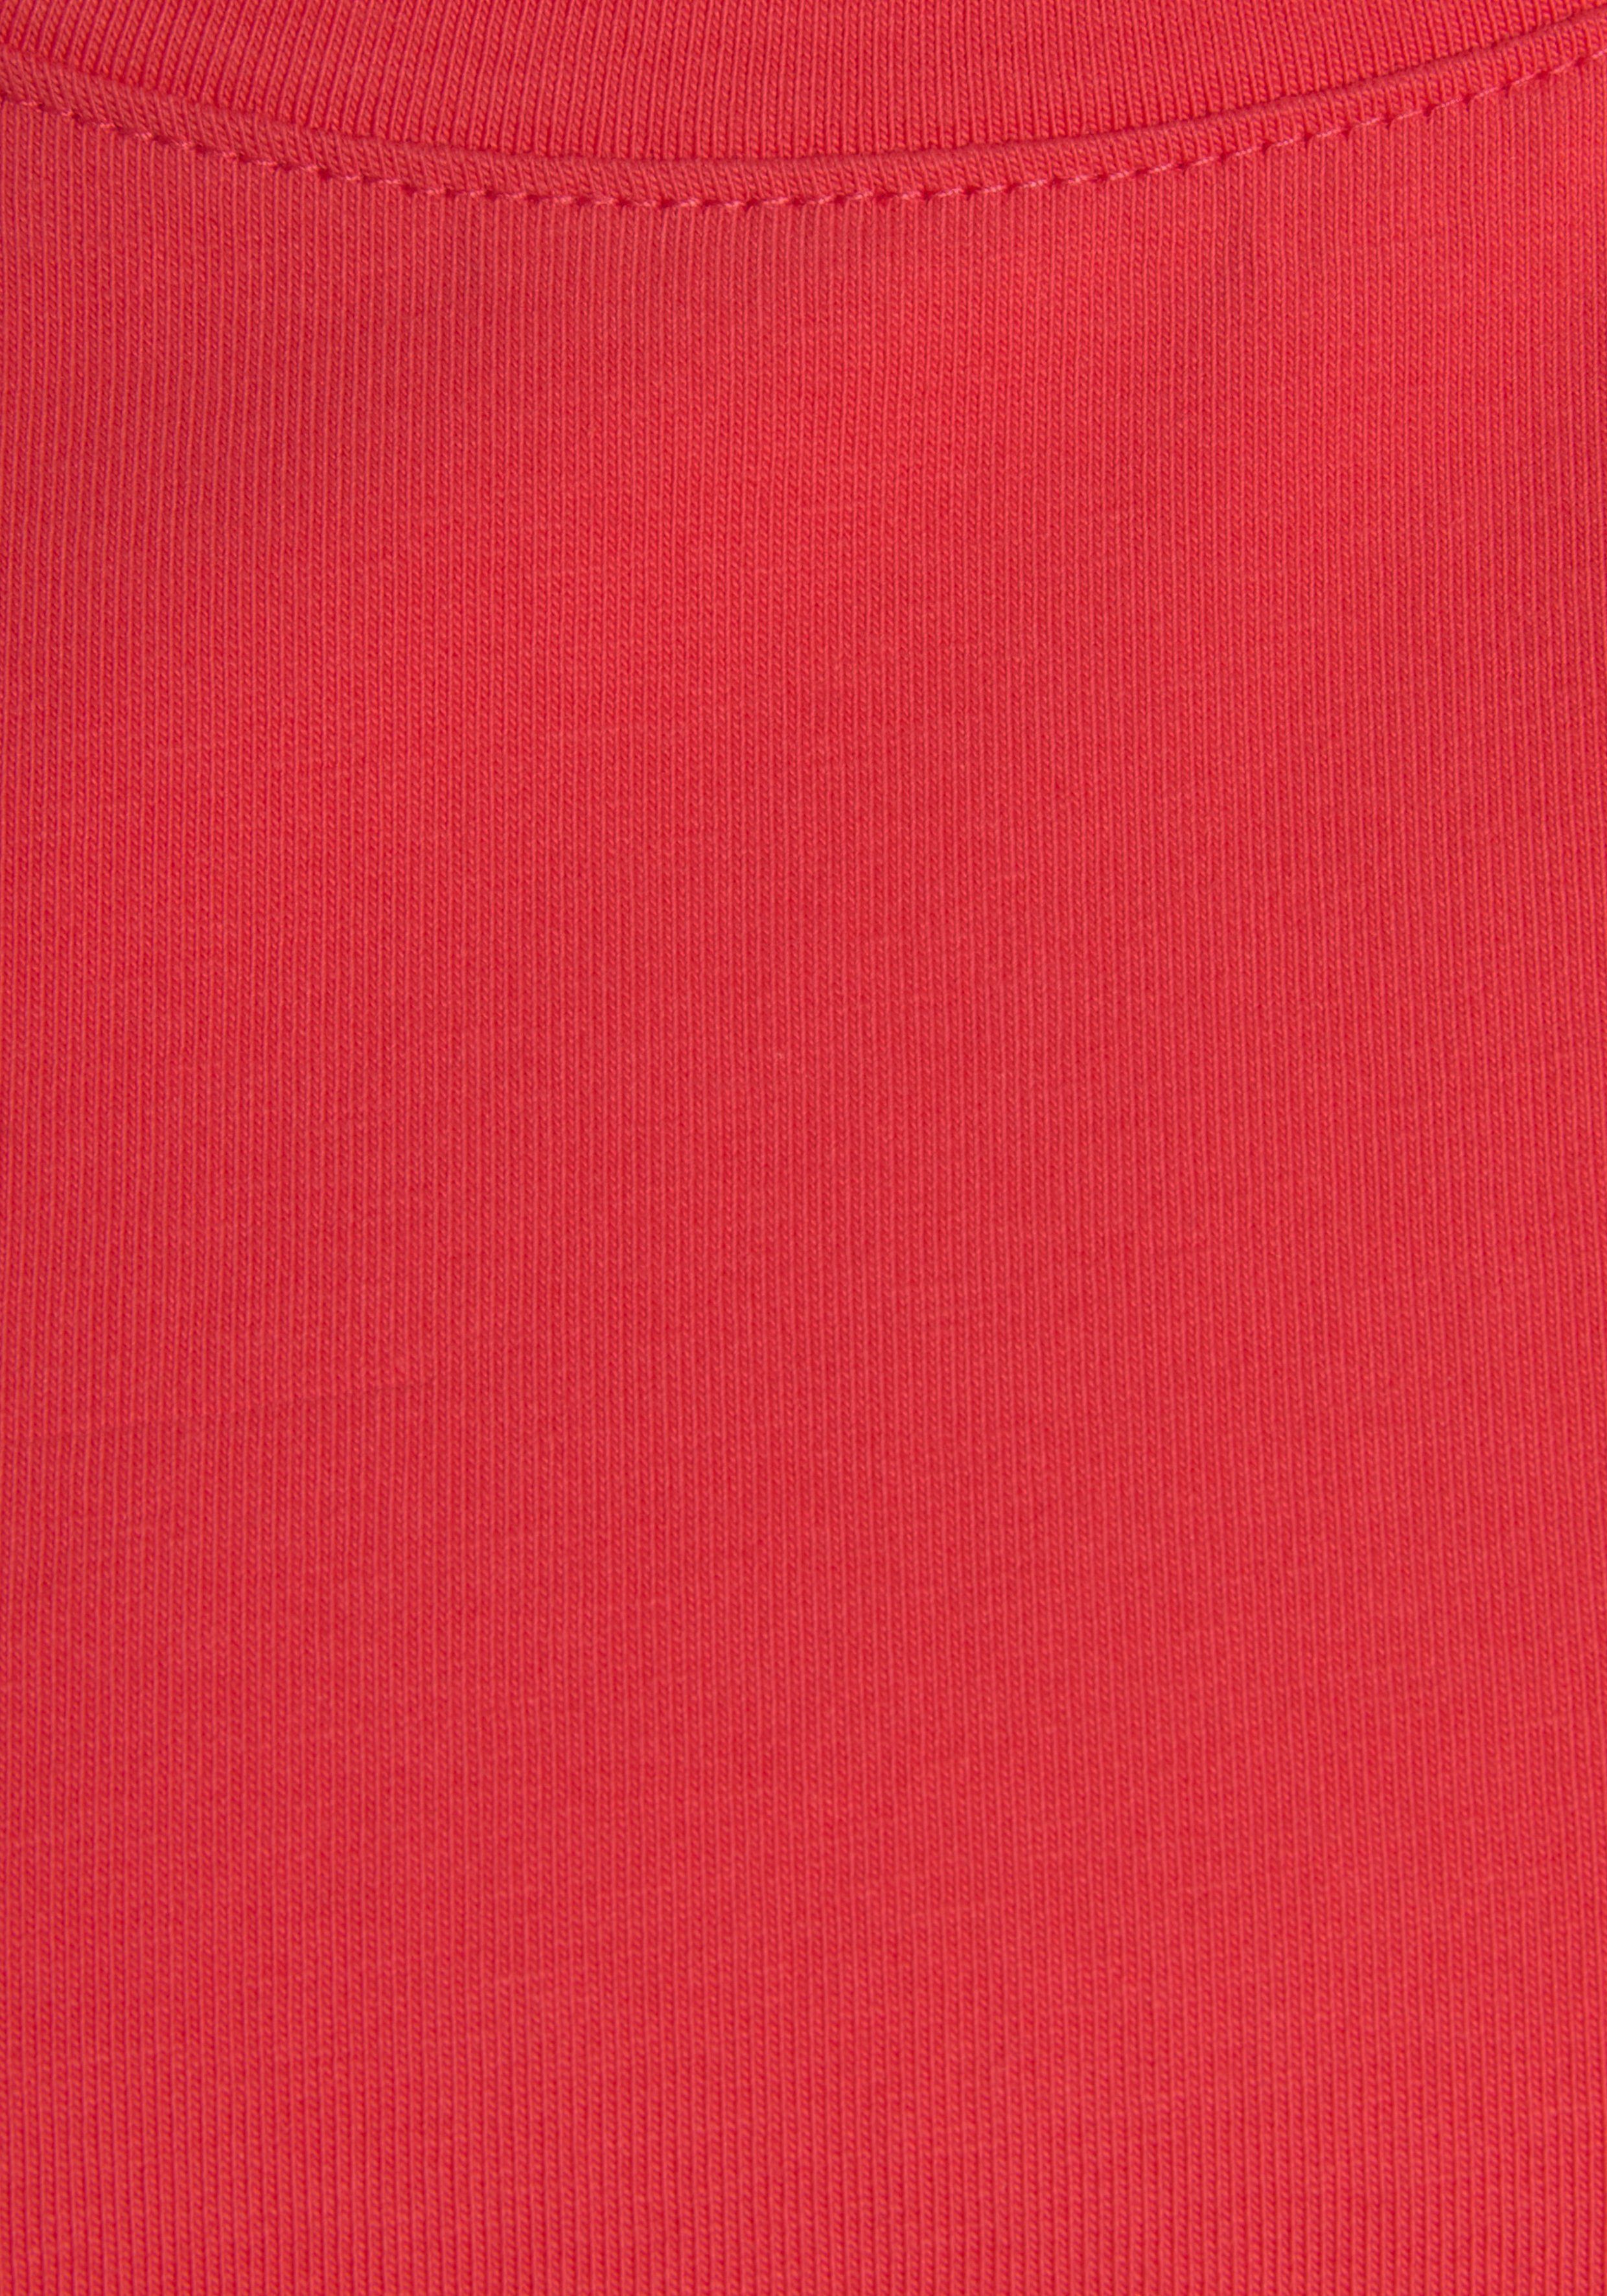 H.I.S T-Shirt mit Ärmelaufschlag im Loungewear rot Stil, maritimen